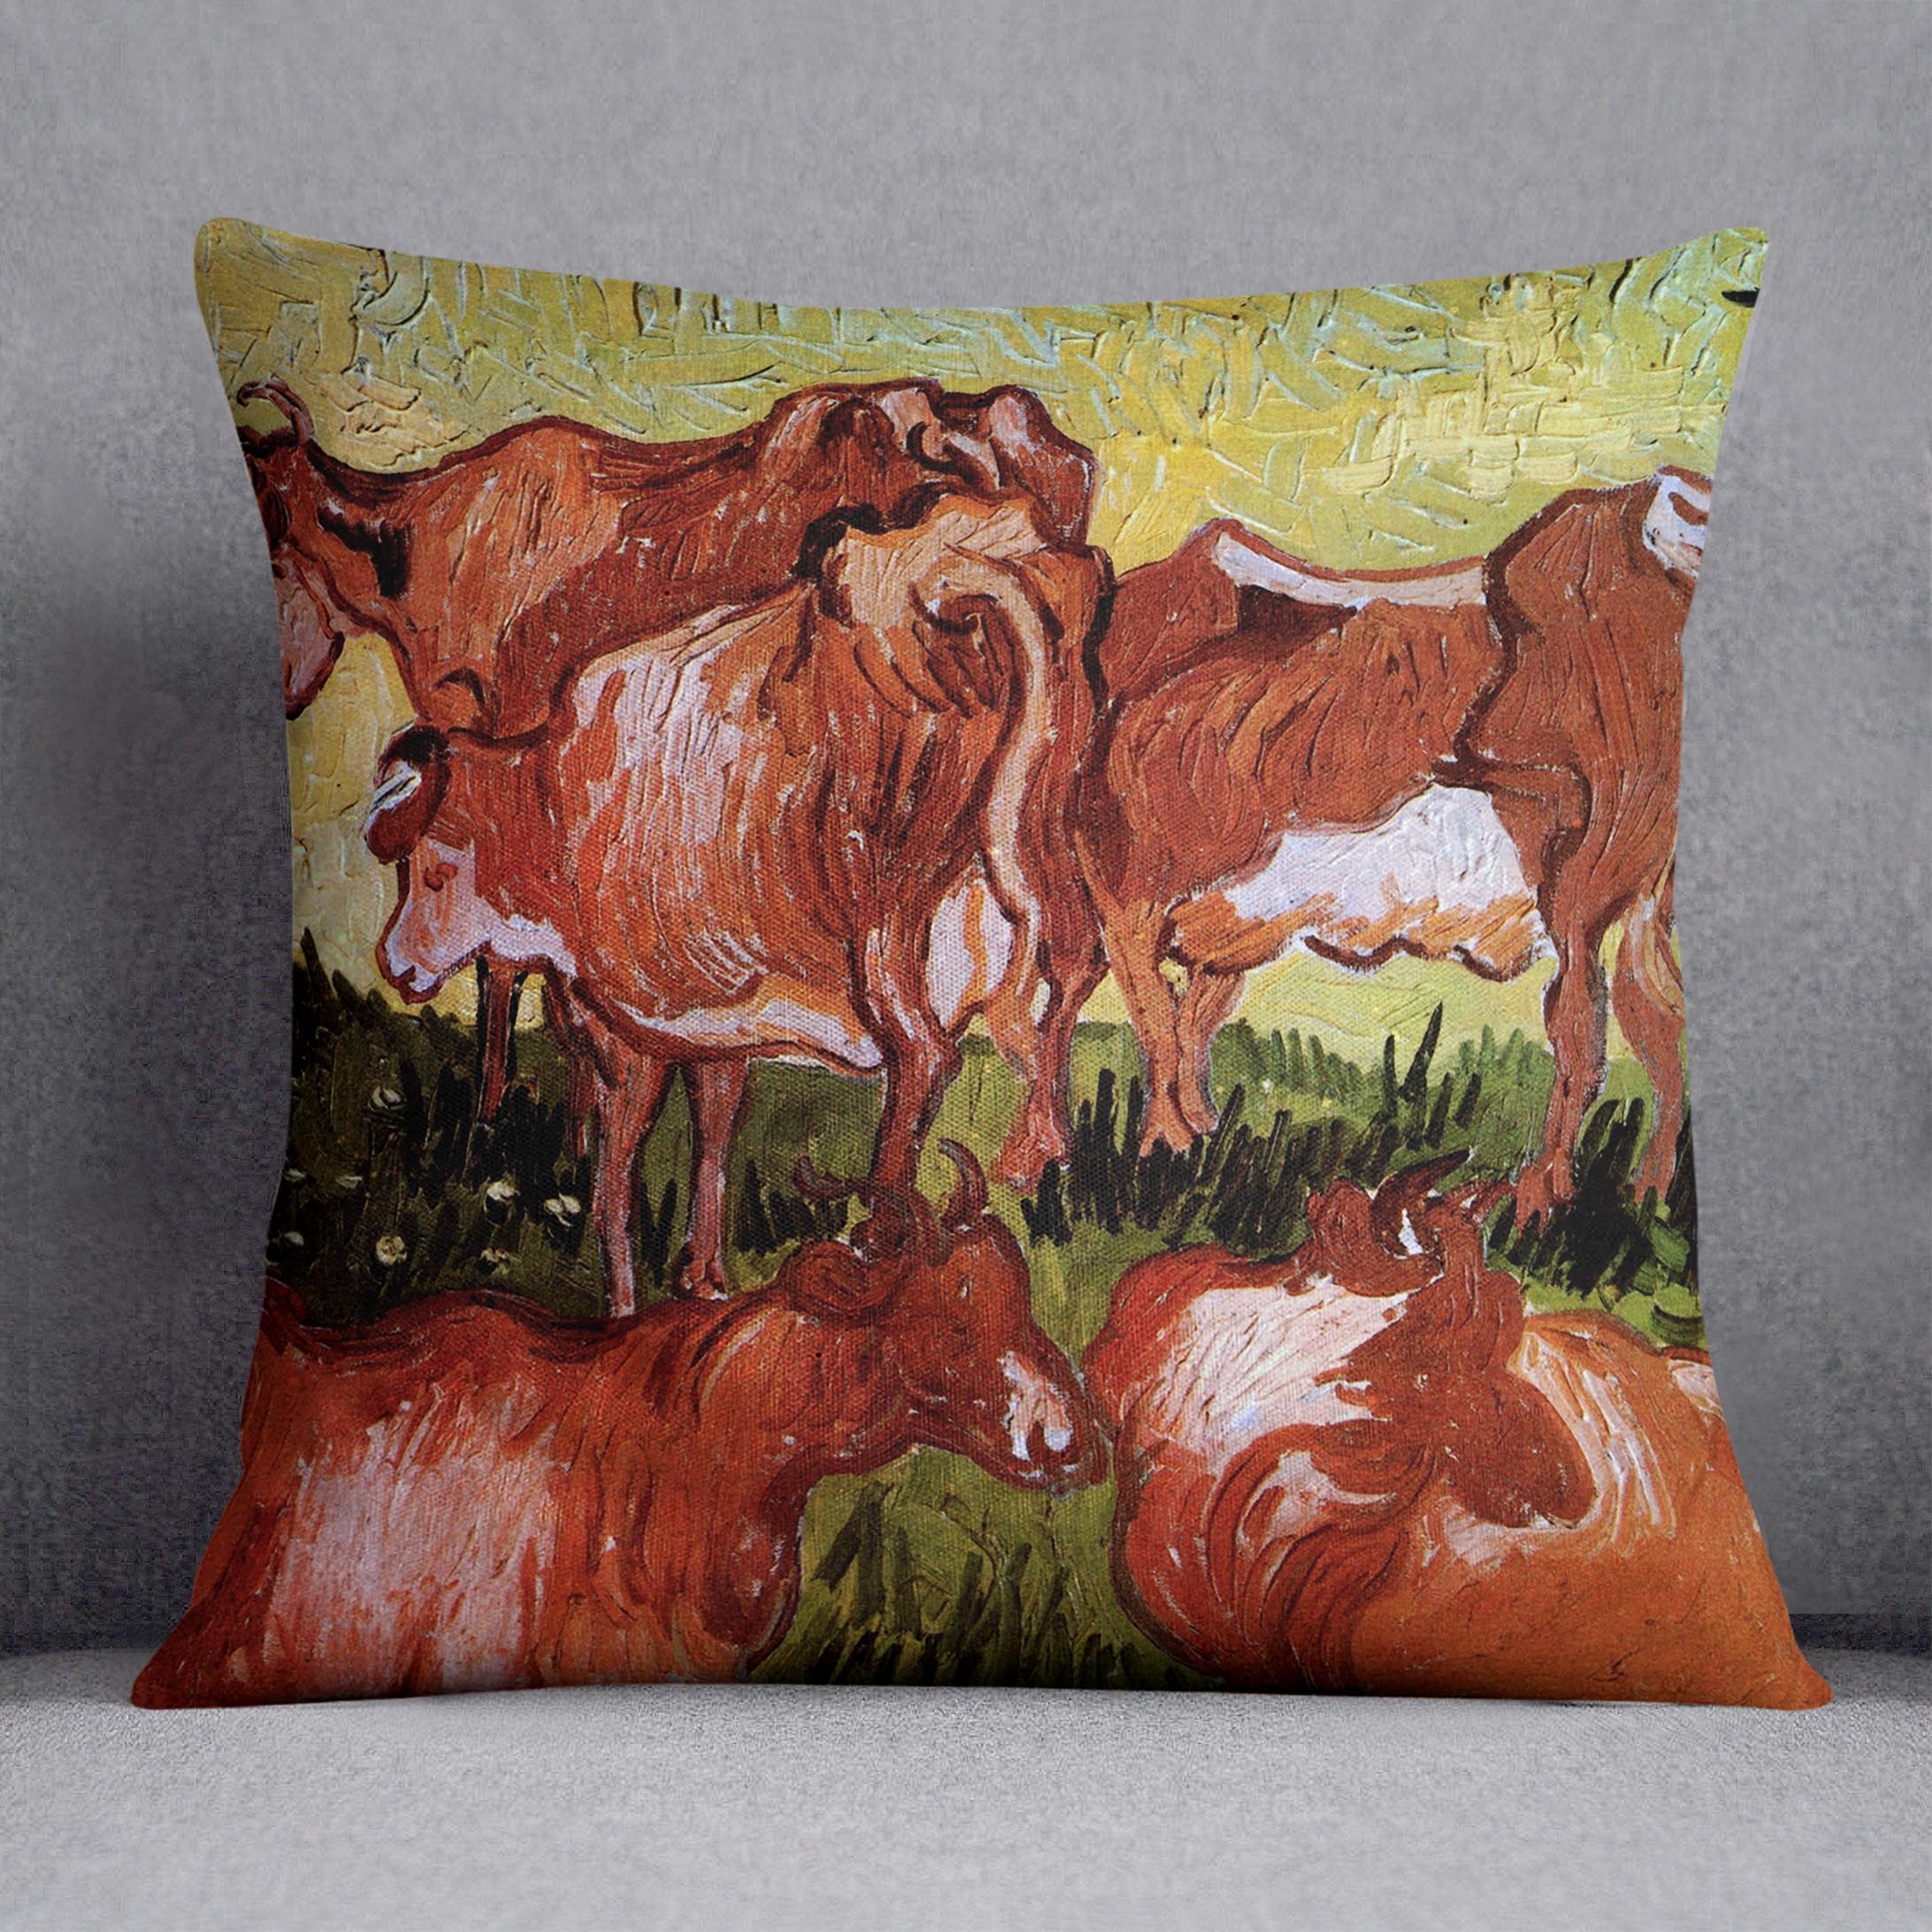 Cows after Jordaens by Van Gogh Cushion